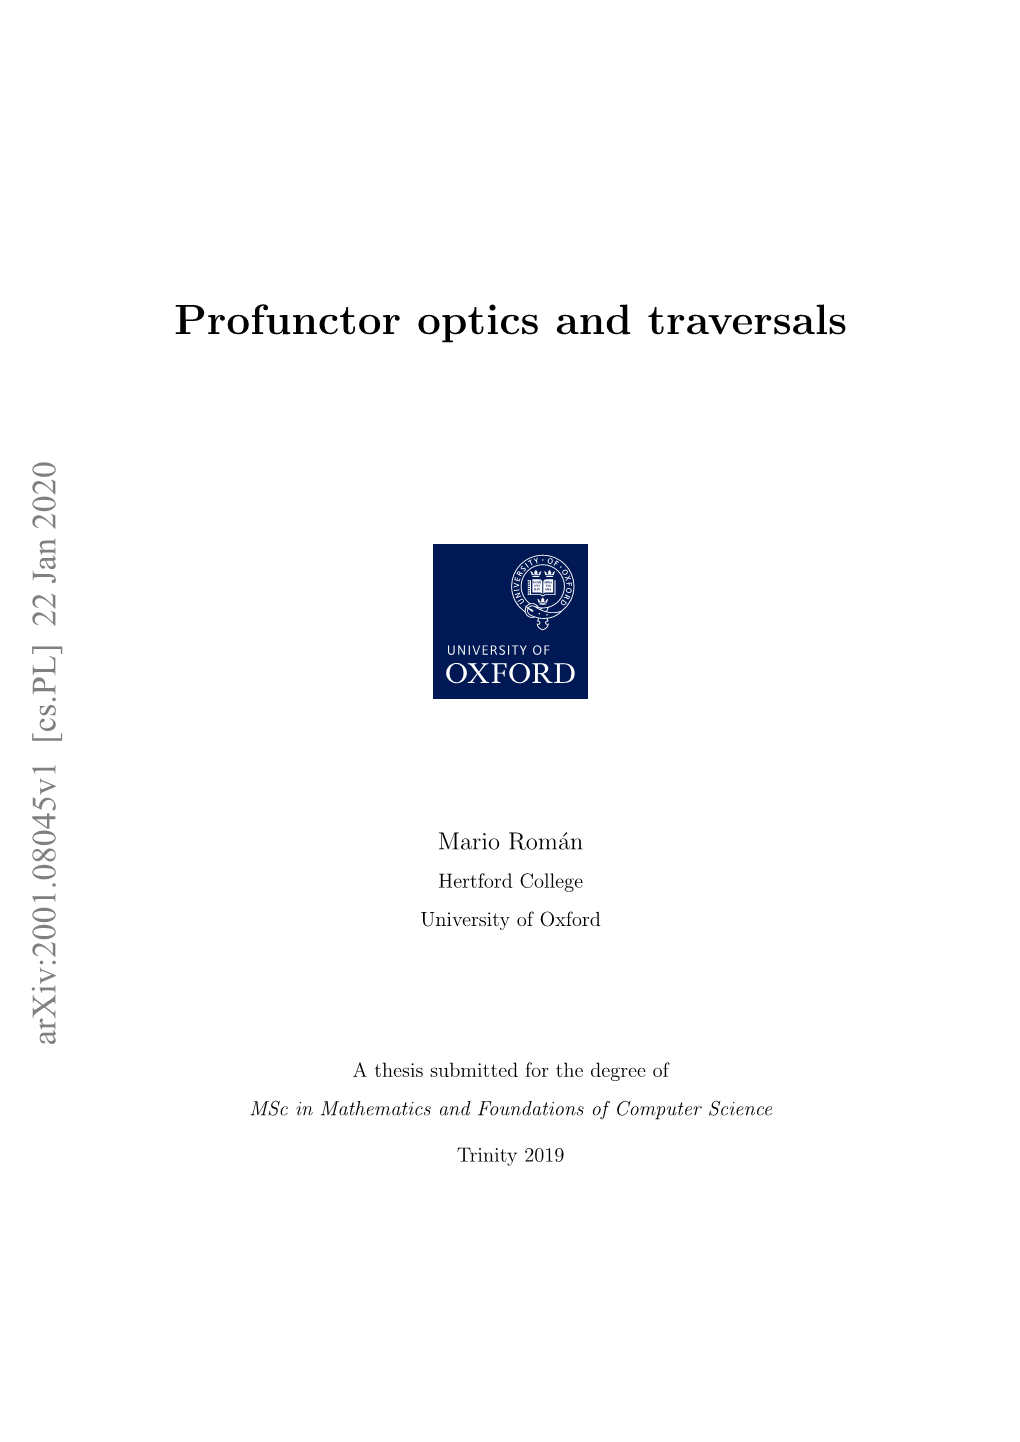 Profunctor Optics and Traversals